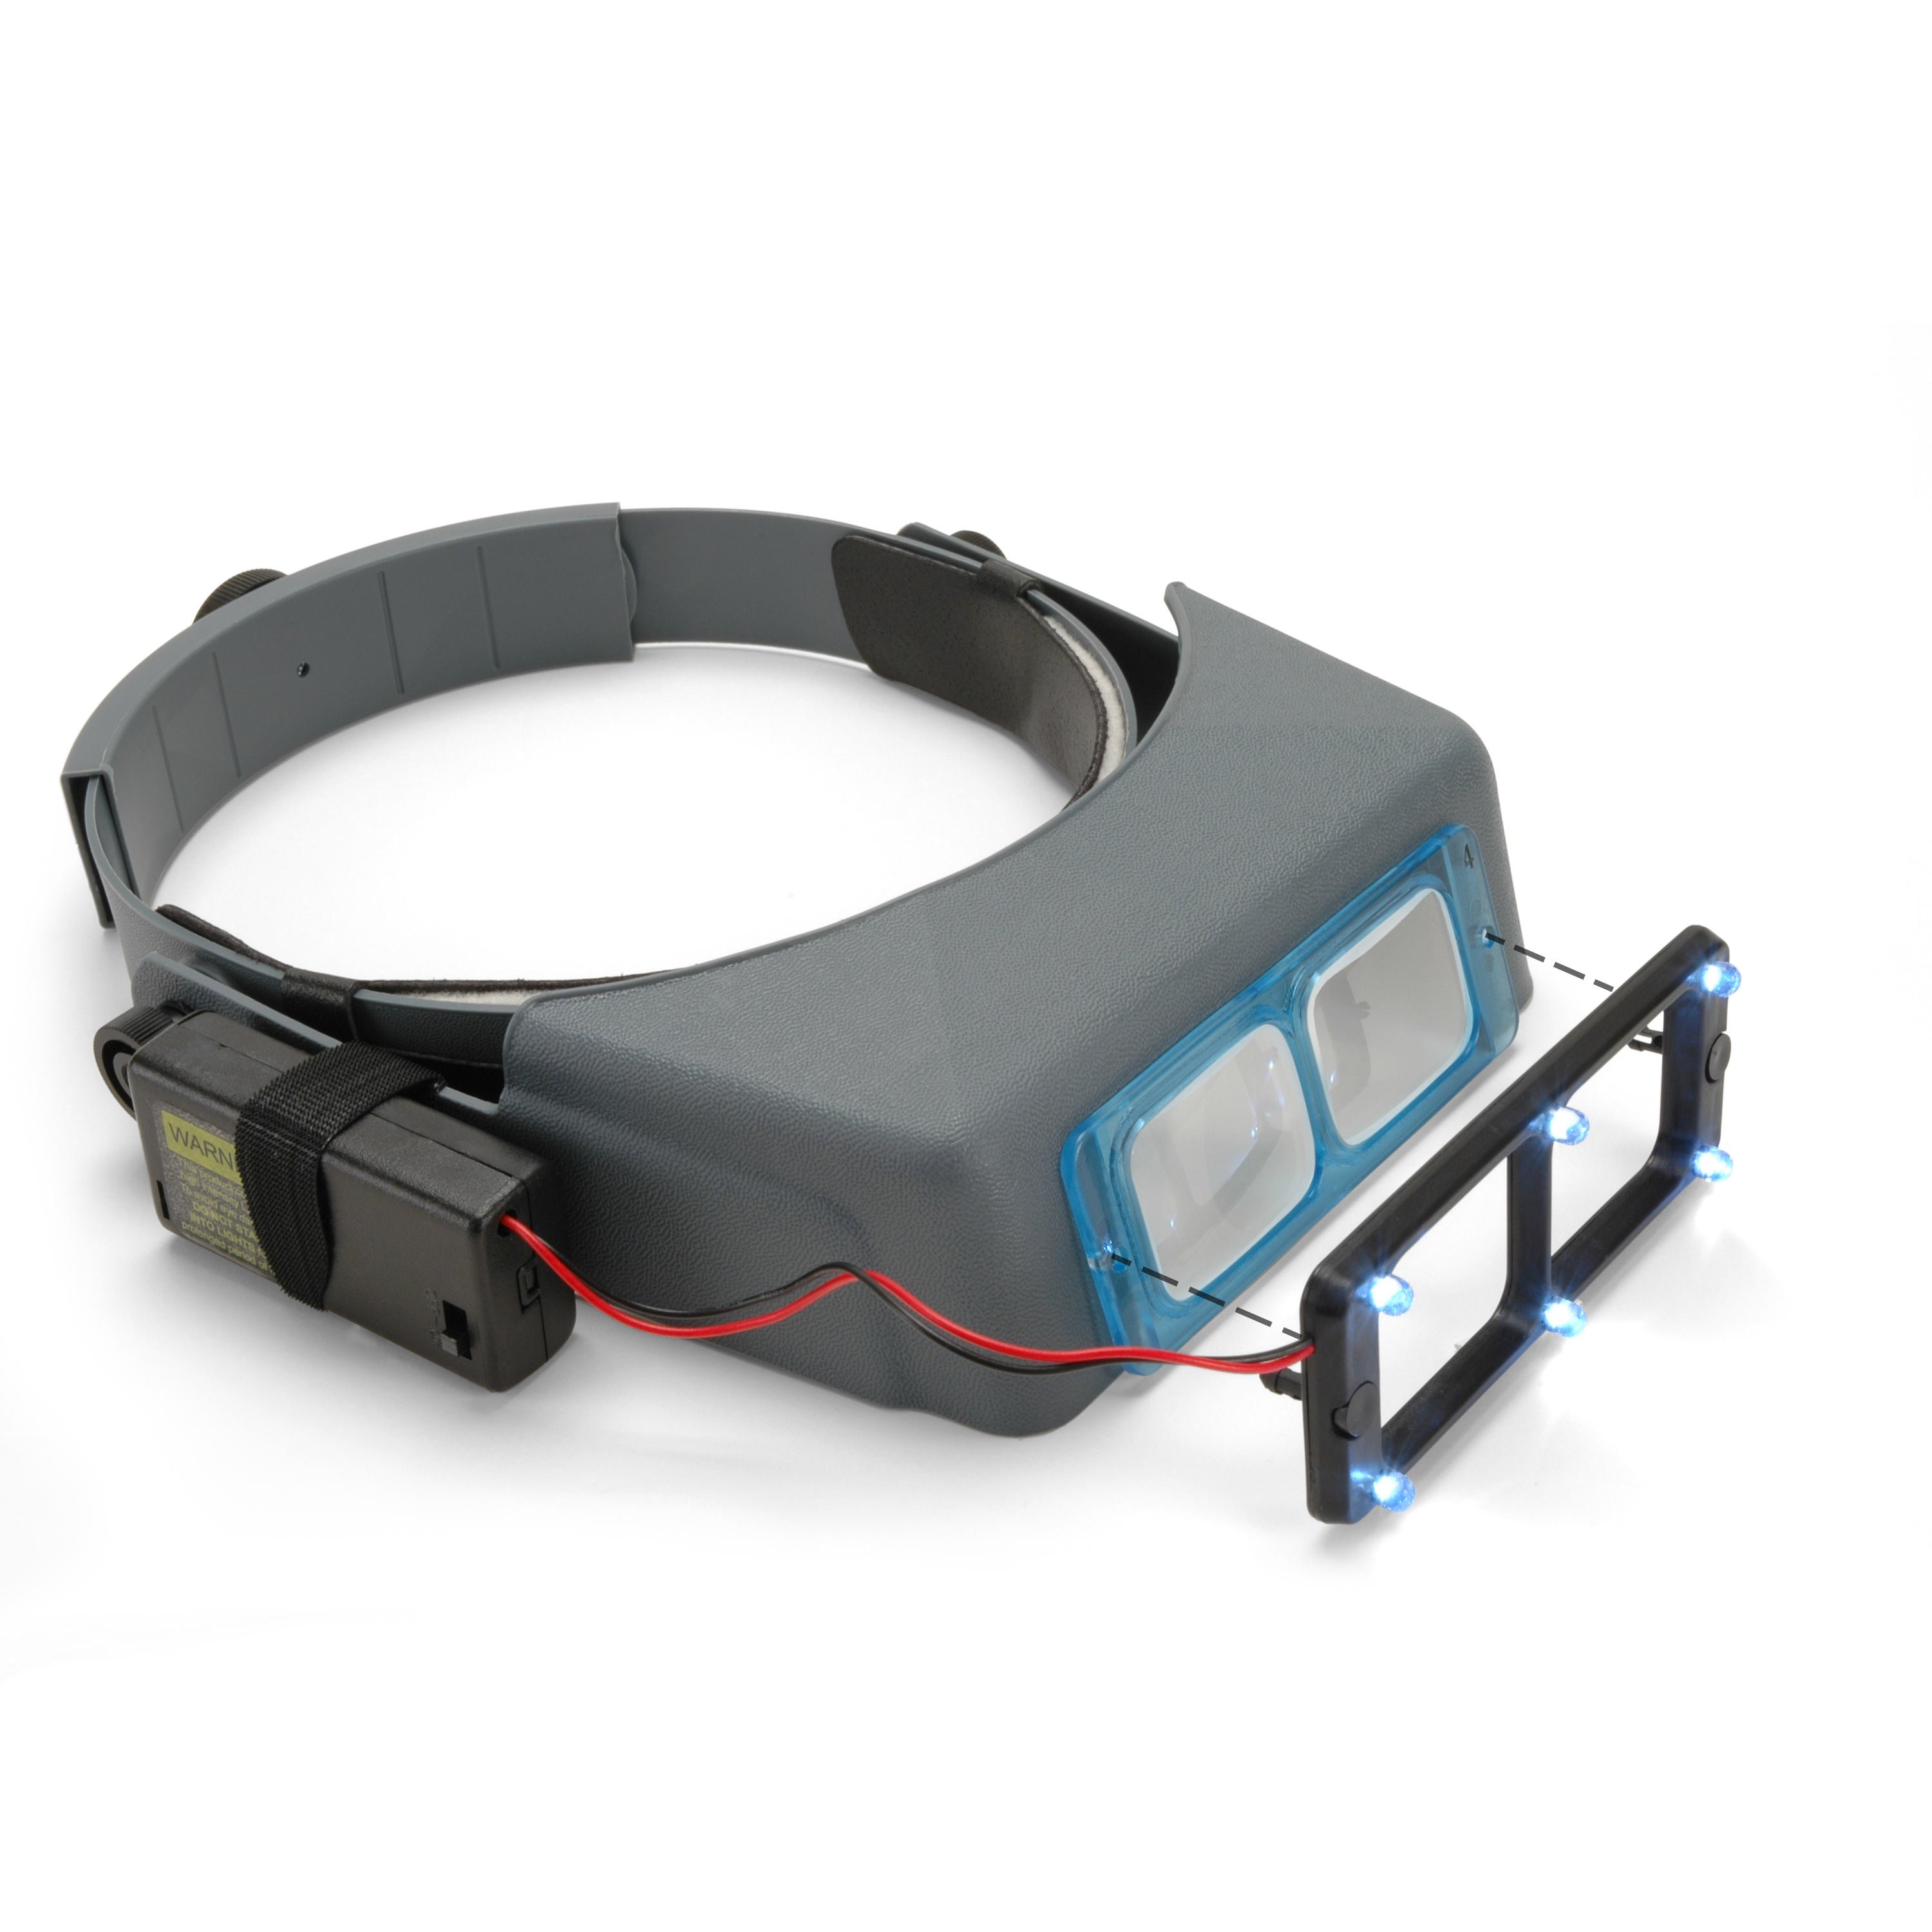 OptiVISOR Headband Magnifier - StewMac